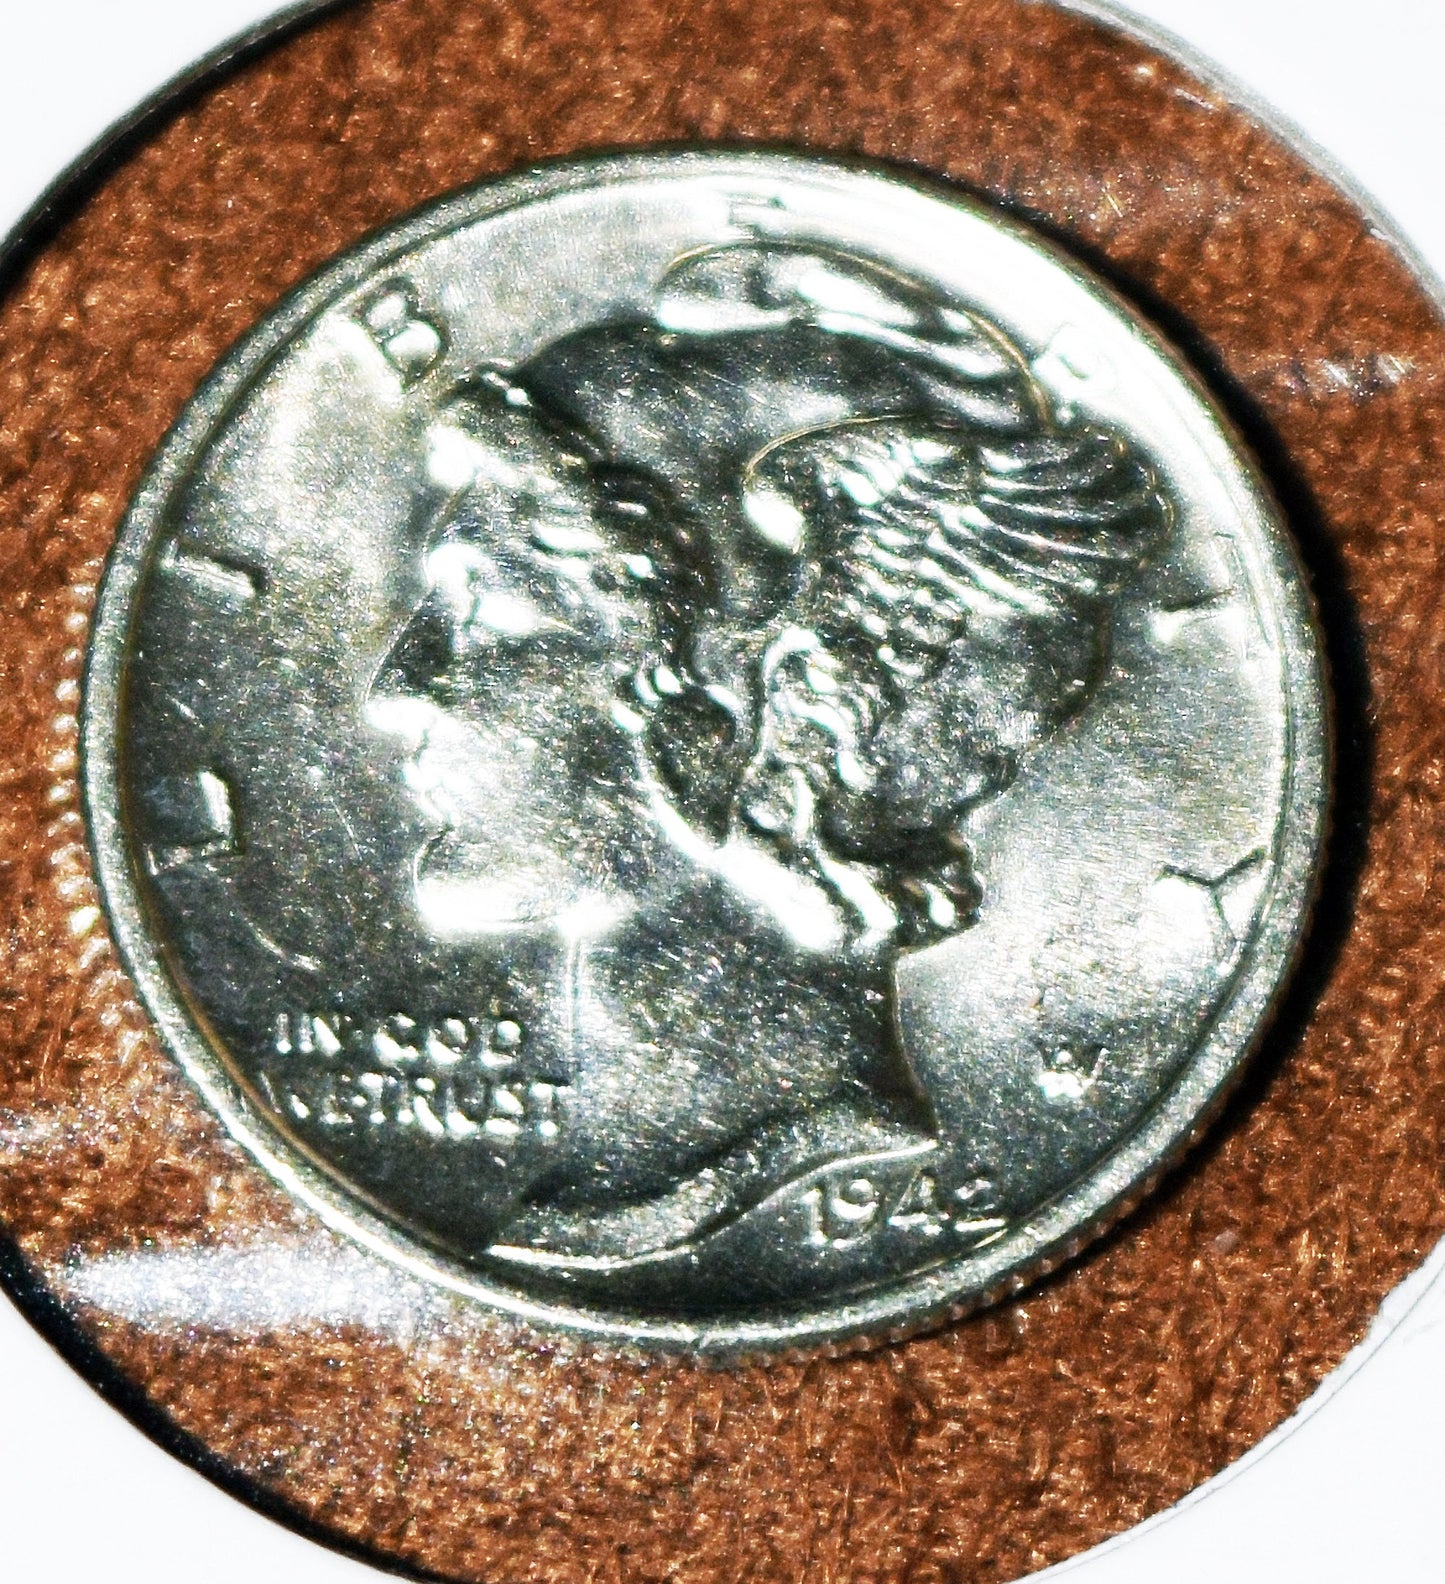 Brilliant, uncirculated 1942 P silver mercury dime